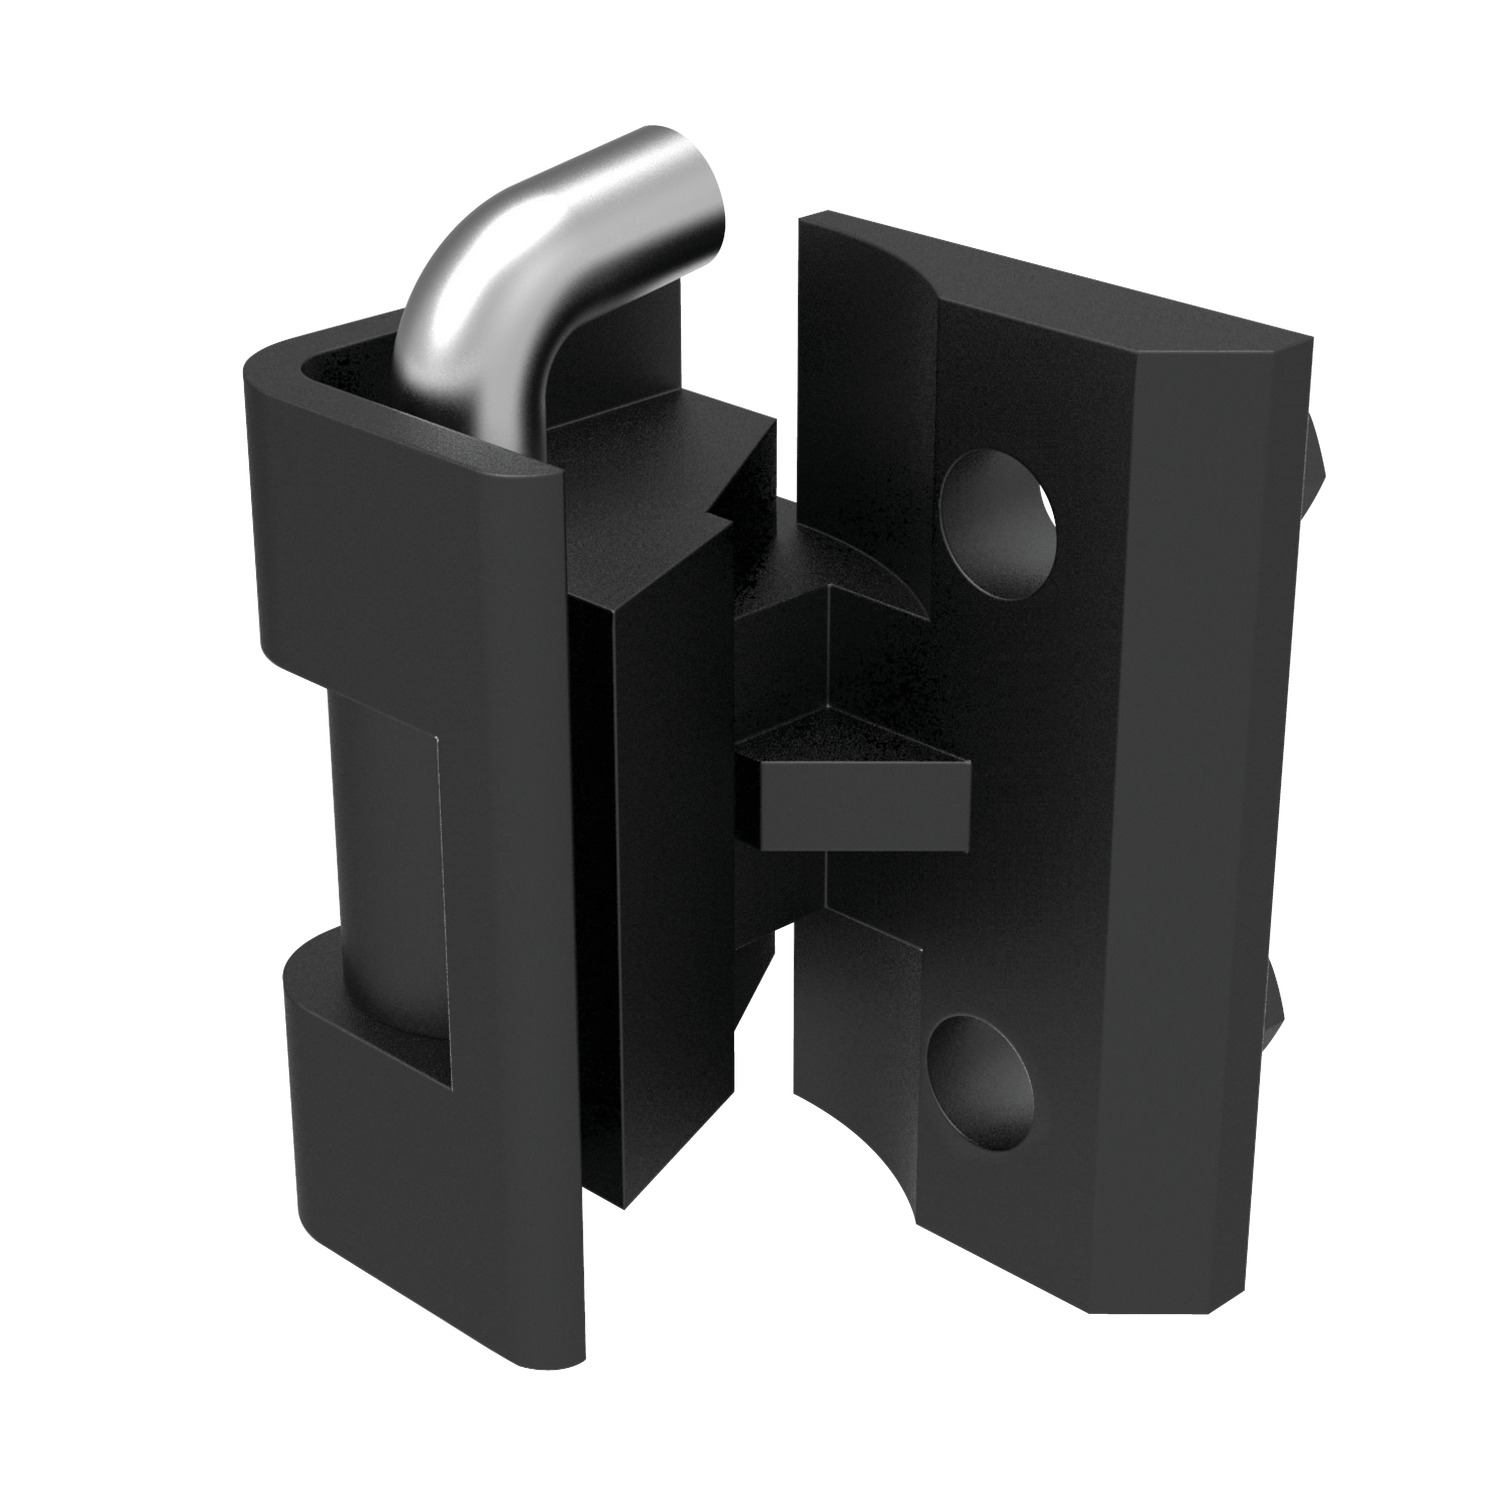 Corner Hinge - 24 to 26mm Door Return Black coated corner hinge, cut out and counter sunk screw. Universal left & right hand opening doors.